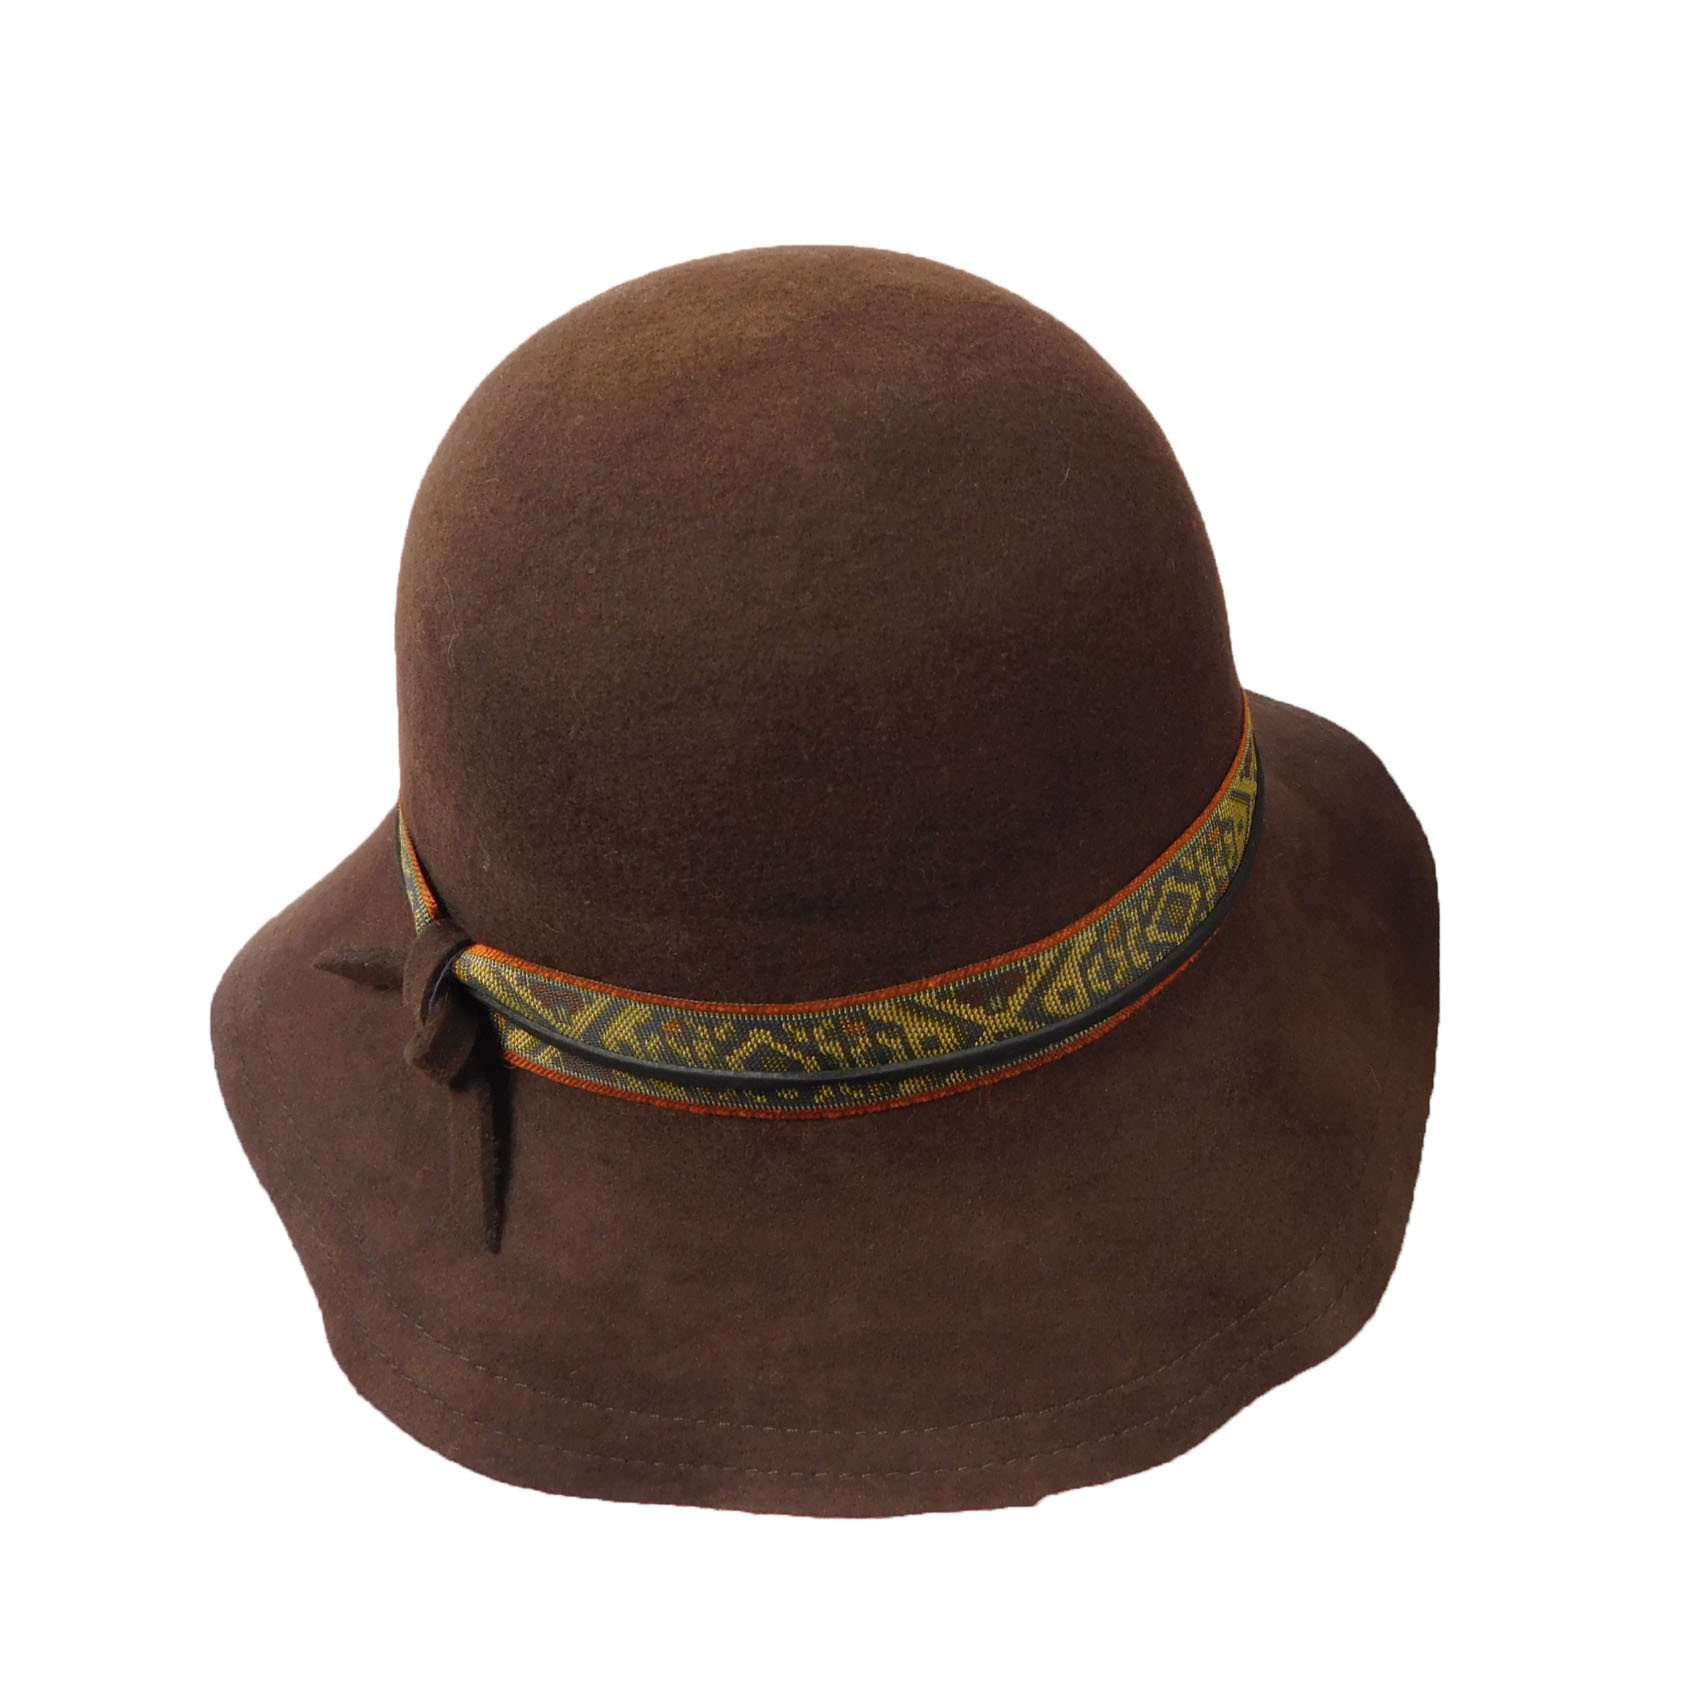 Small Brim Floppy with Southwest Motif Band, Wide Brim Hat - SetarTrading Hats 